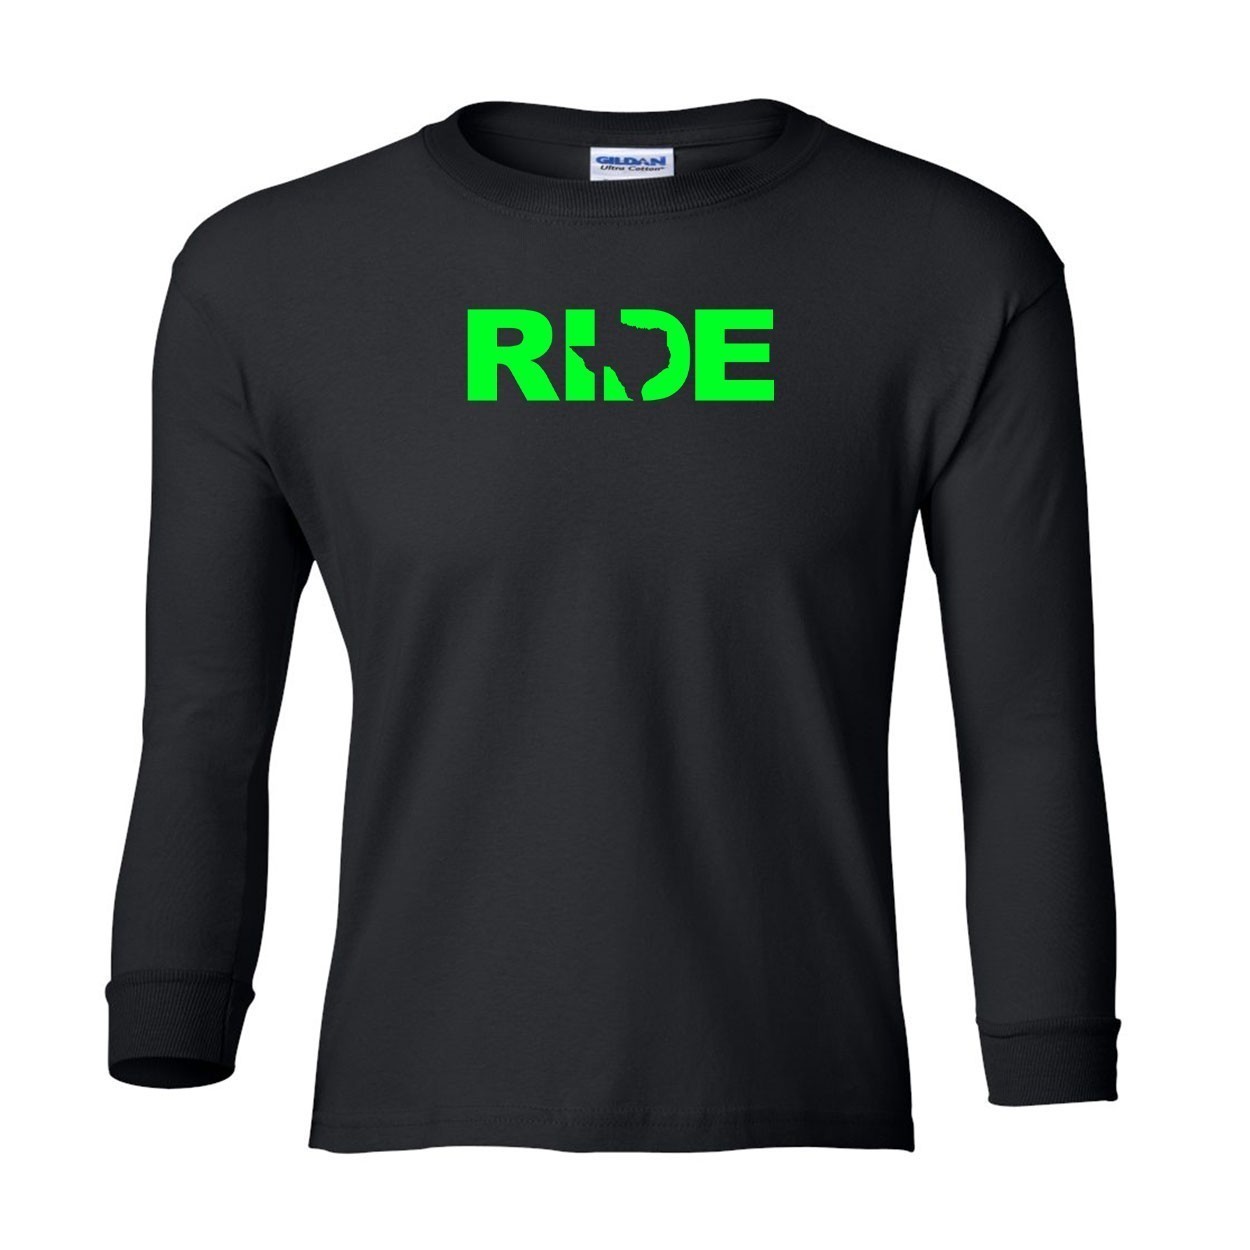 Ride Texas Classic Youth Unisex Long Sleeve T-Shirt Black (Green Logo)